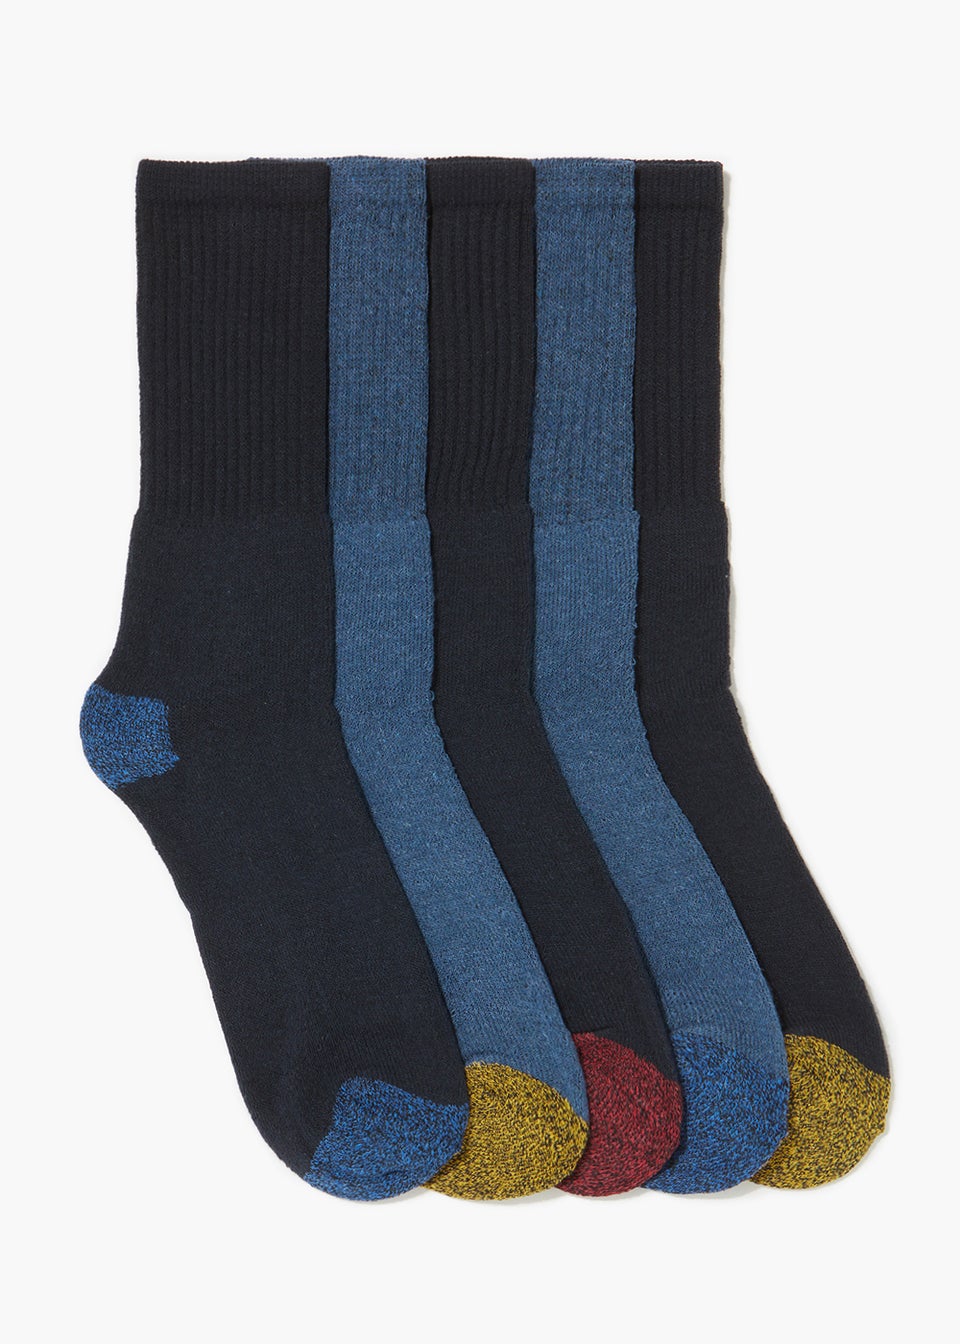 5 Pack Blue Work Socks - Matalan